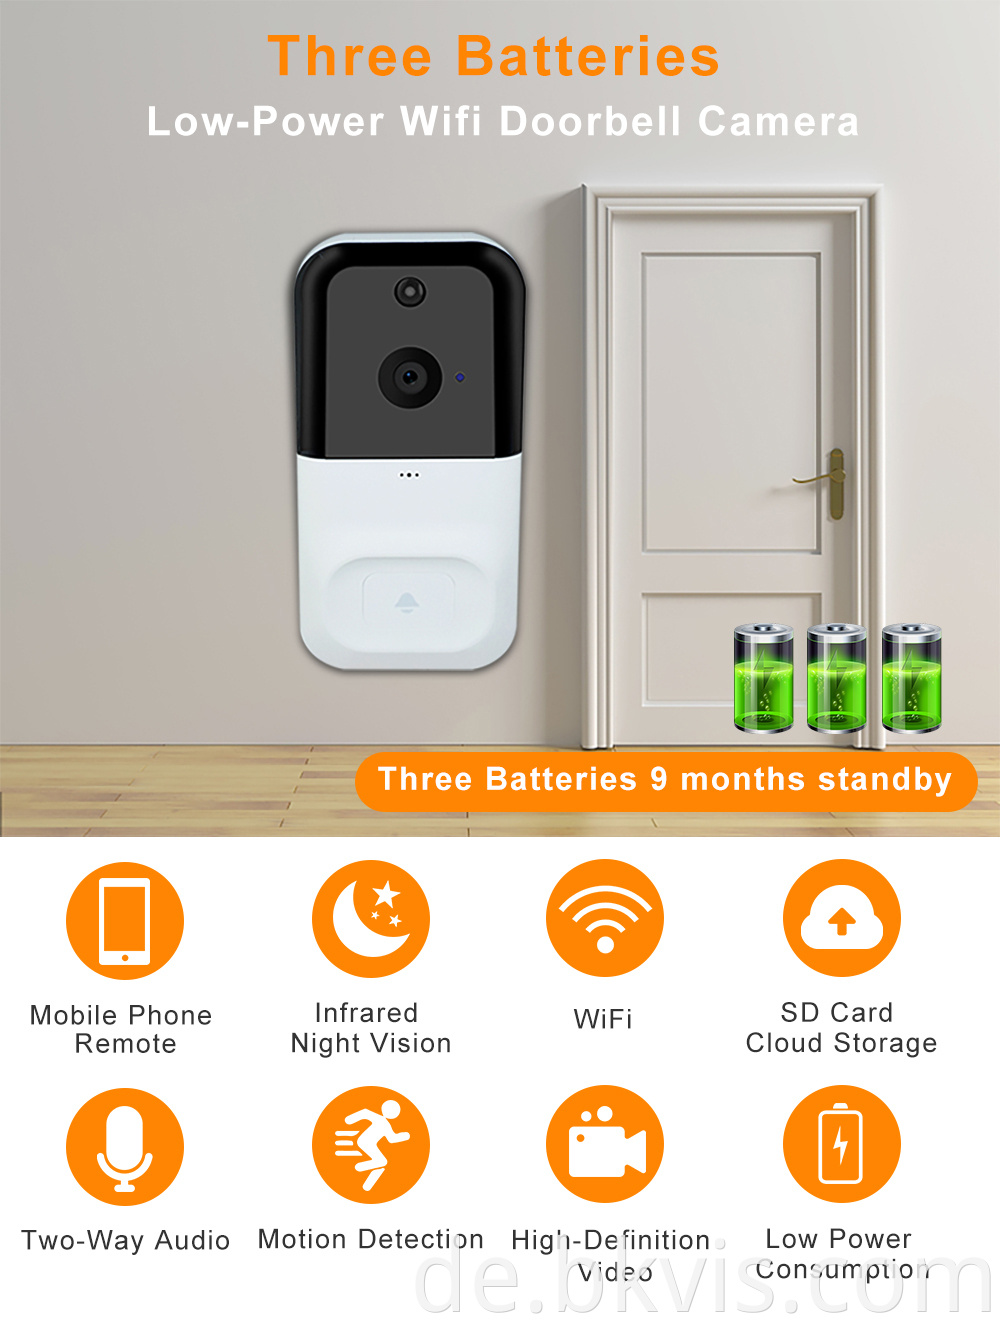 Smart Home Intercom Security Video Camera Doorbells